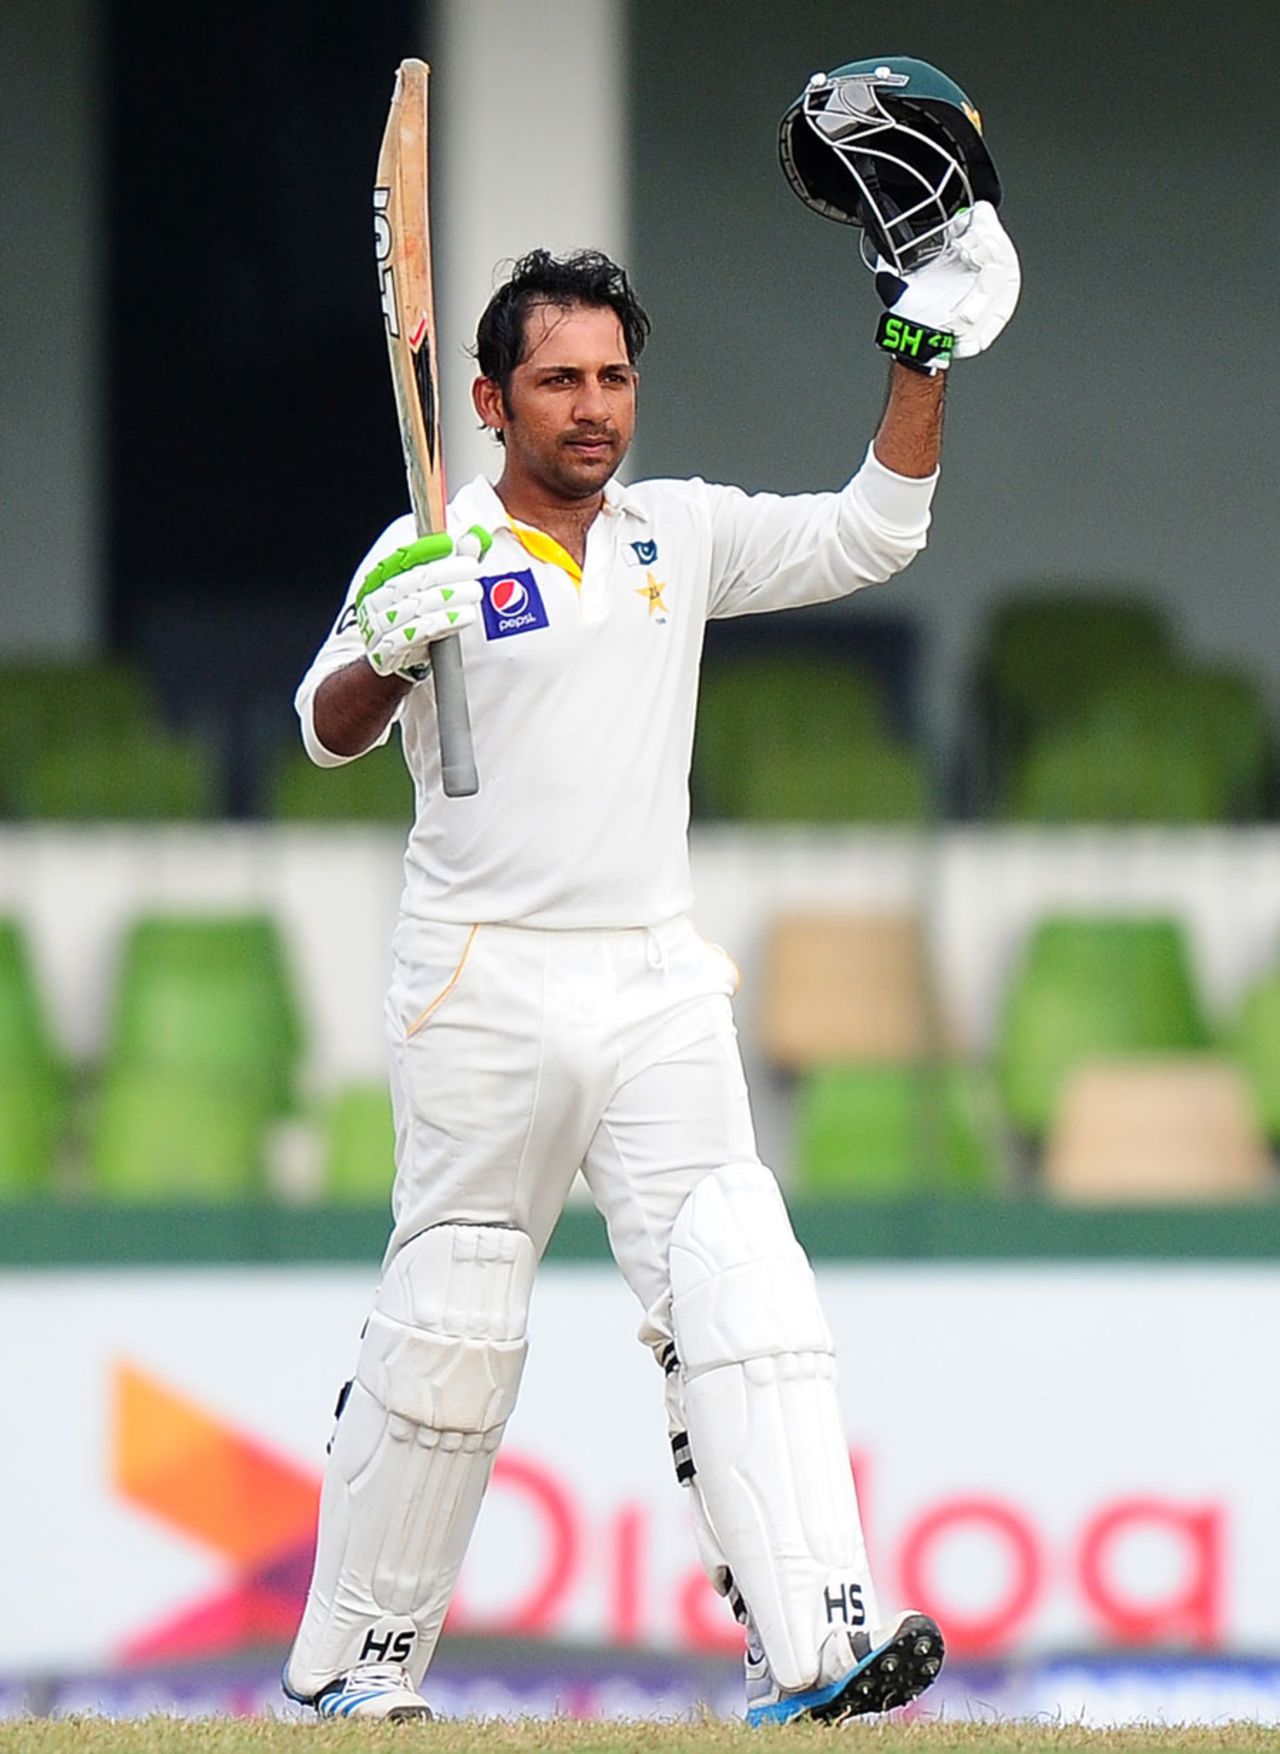 Sarfraz Ahmed raises his bat after reaching a half-century, Sri Lanka v Pakistan, 2nd Test, Colombo, 2nd day, August 15, 2014